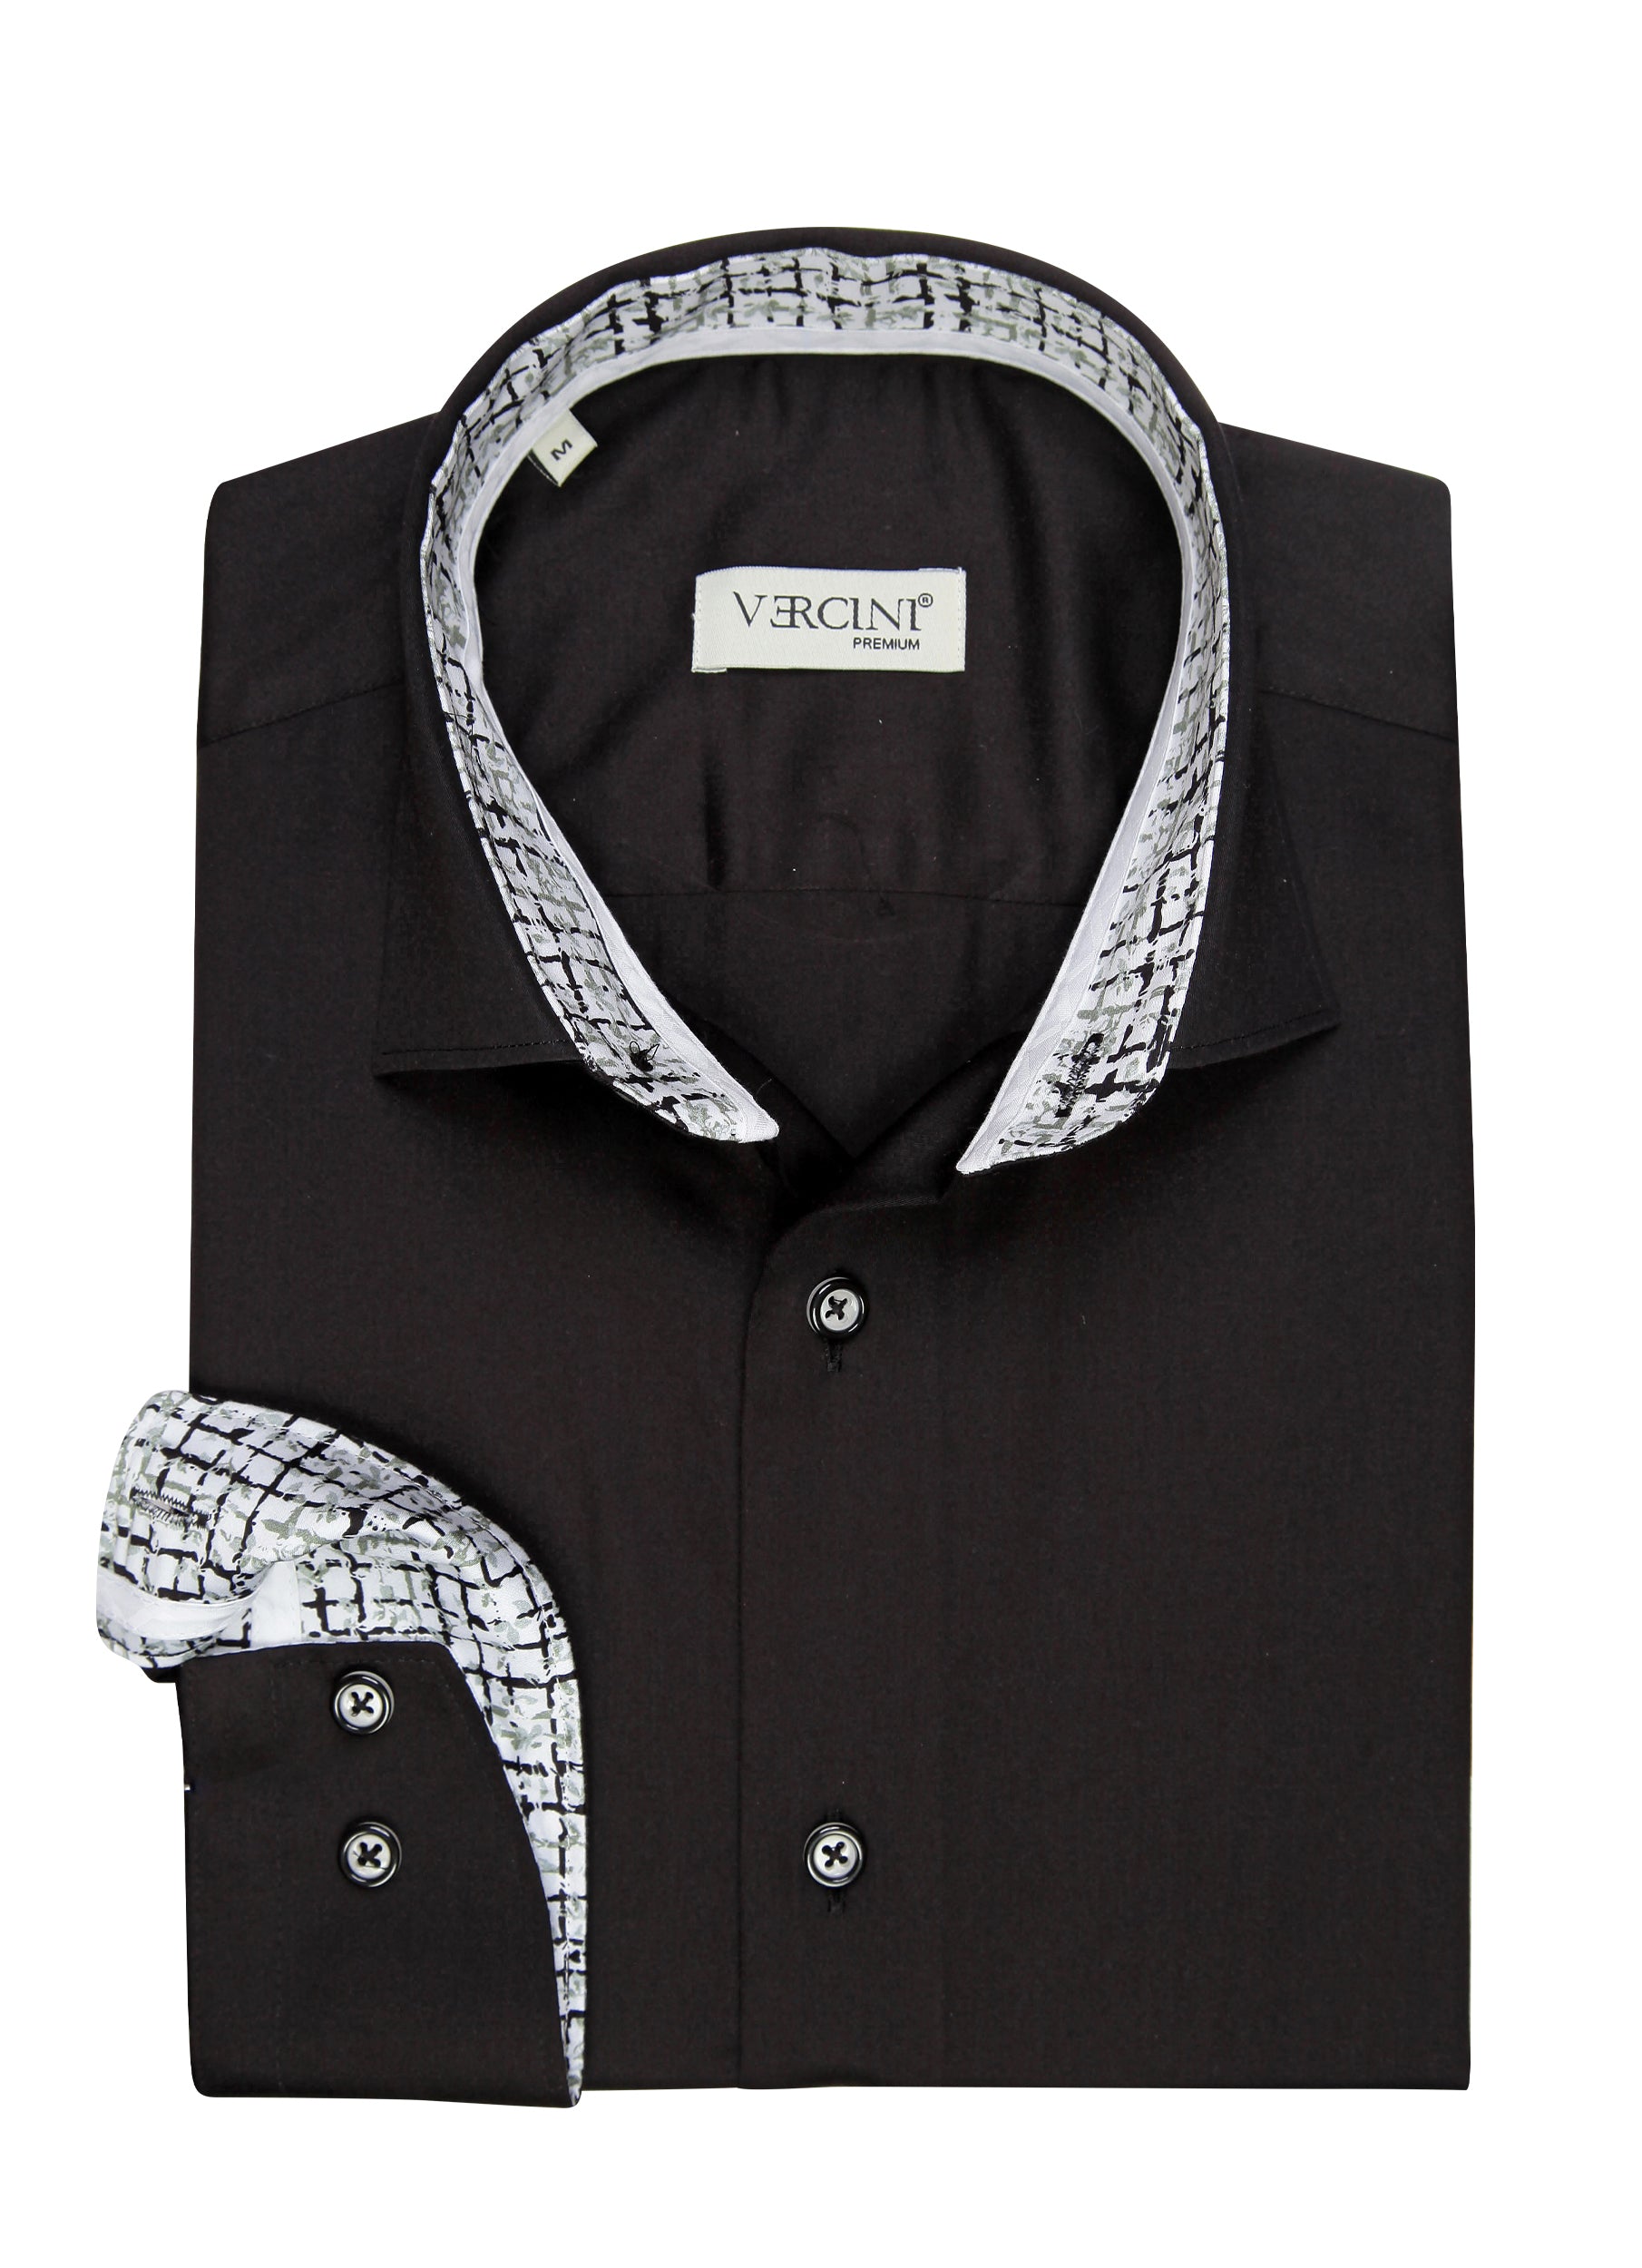 Monochrome Mosaic Prestige Men's Black Dress Shirt DRESS SHIRTS On Sale 30% Off Vercini